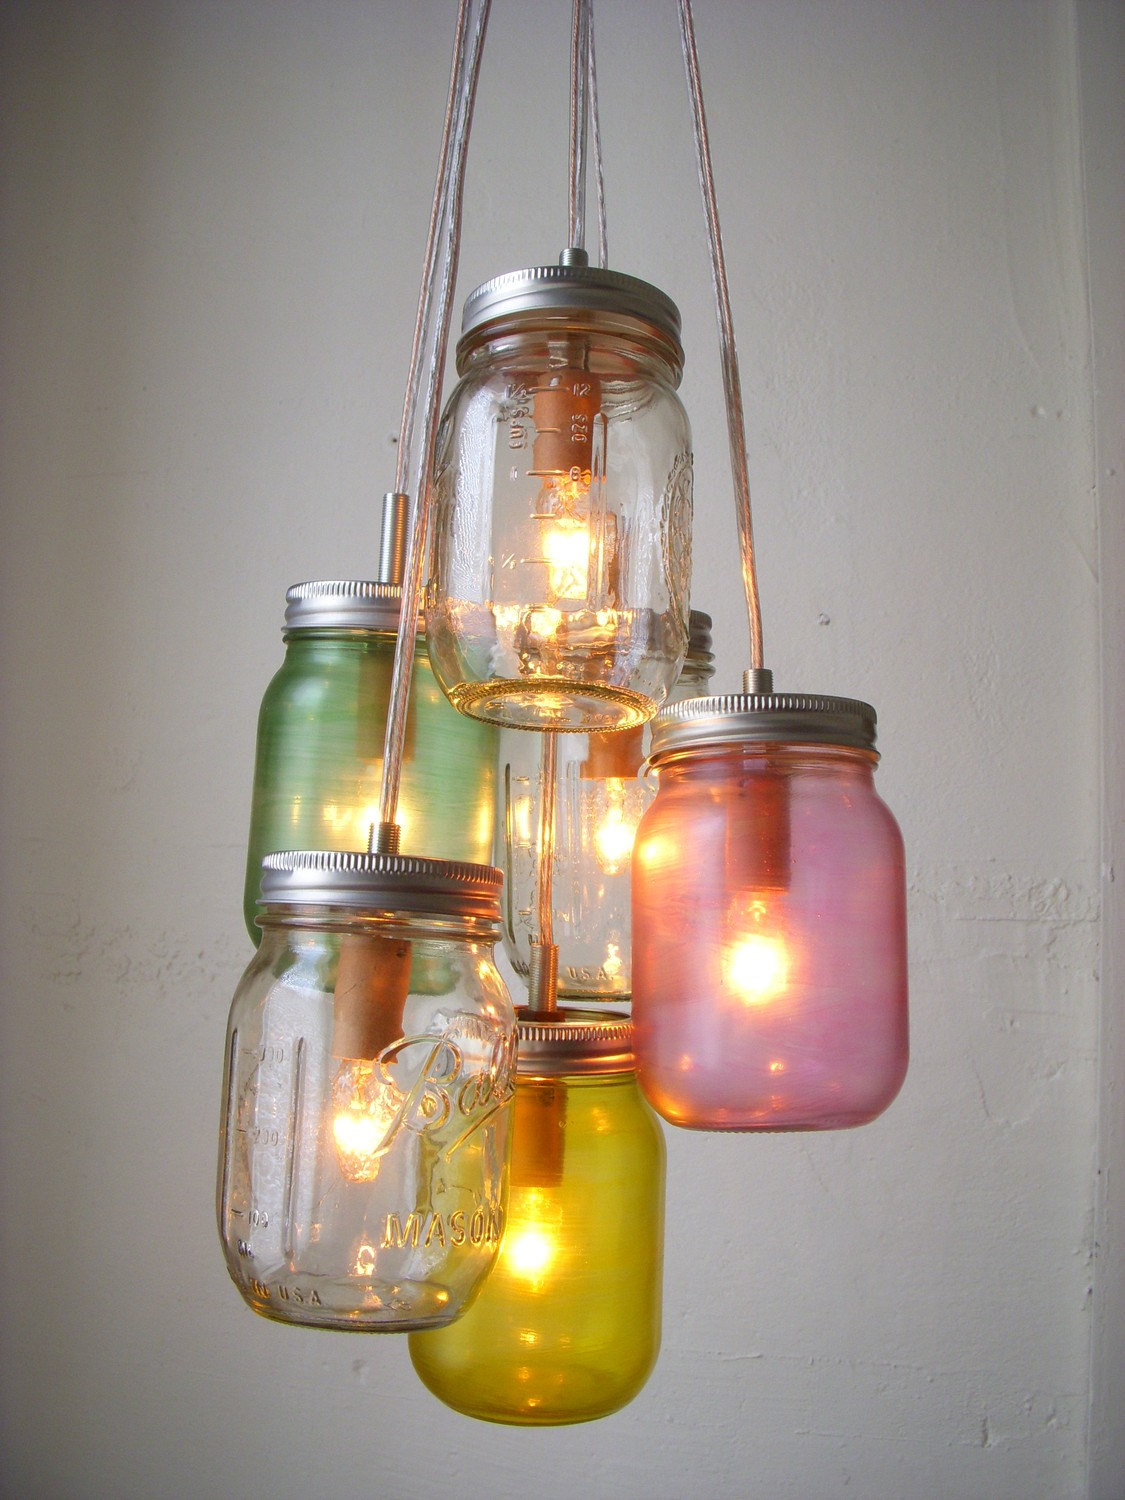 Best ideas about Mason Jar Light Fixtures DIY
. Save or Pin Mason Jar Chandelier Rustic Hanging Mason Jar Pendant Now.